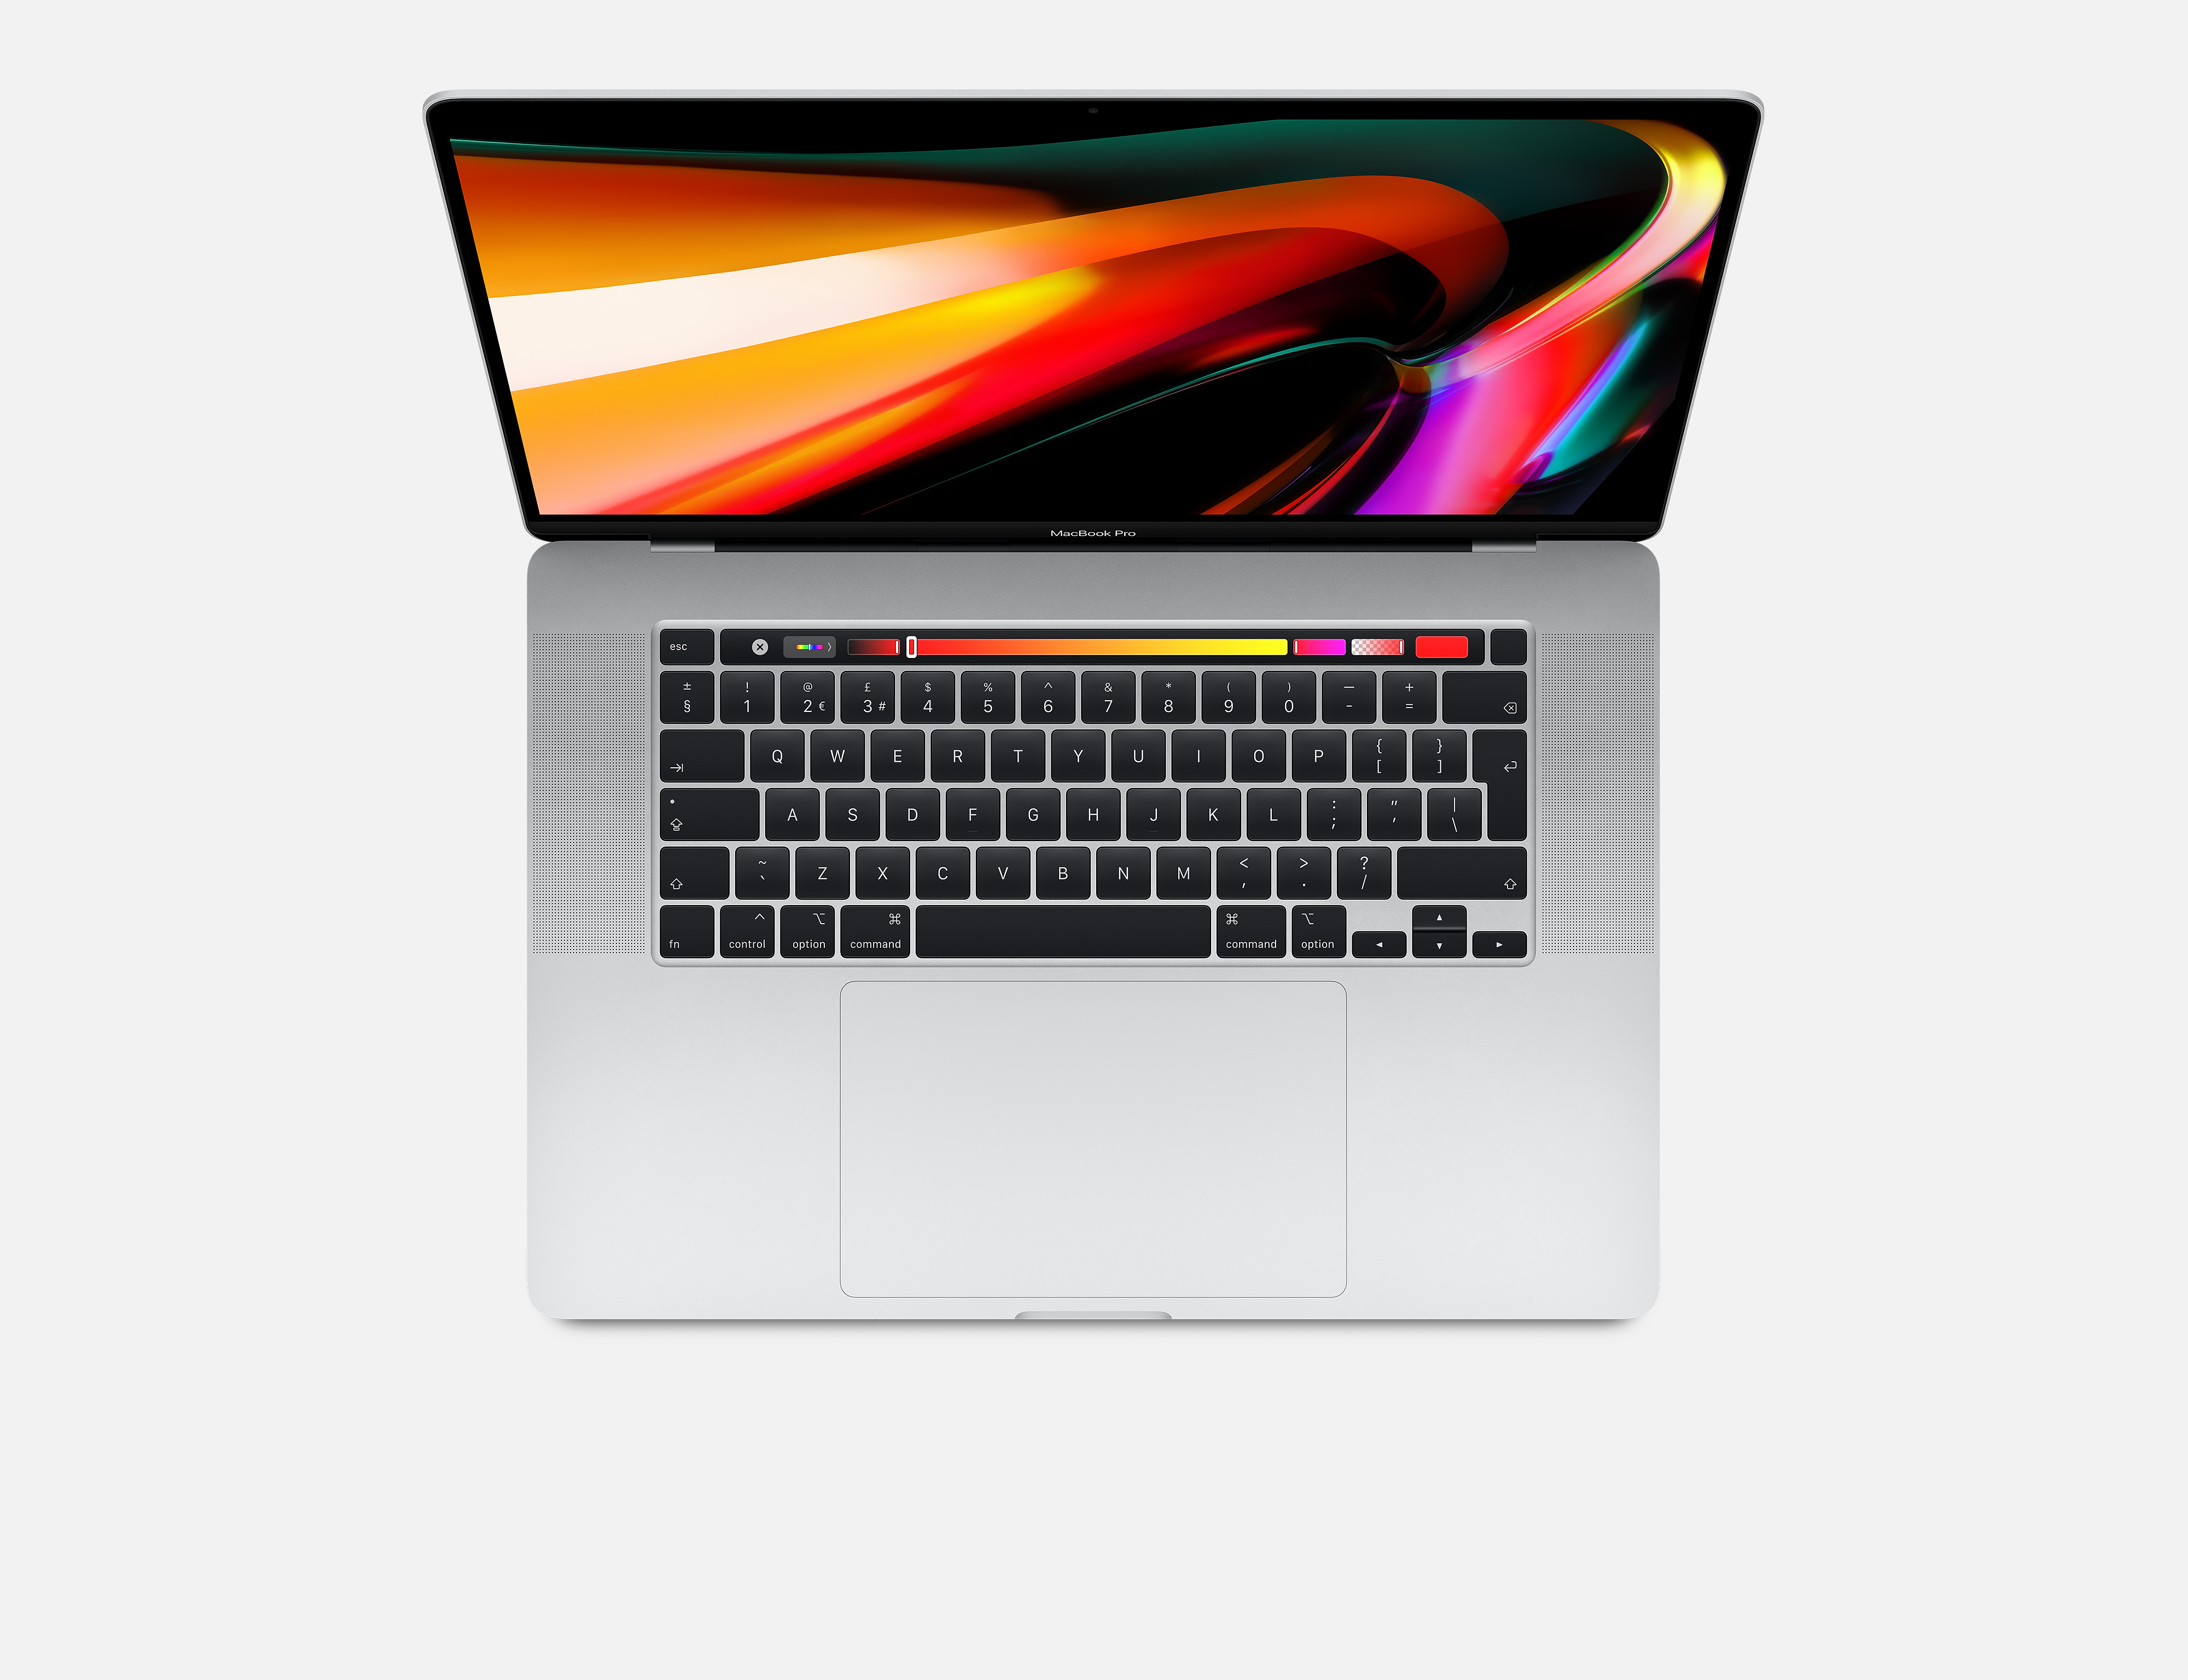 Apple MacBook MacBook Pro i7, 2.6GHz - 512GB (MVVL2N/A) kopen » Centralpoint